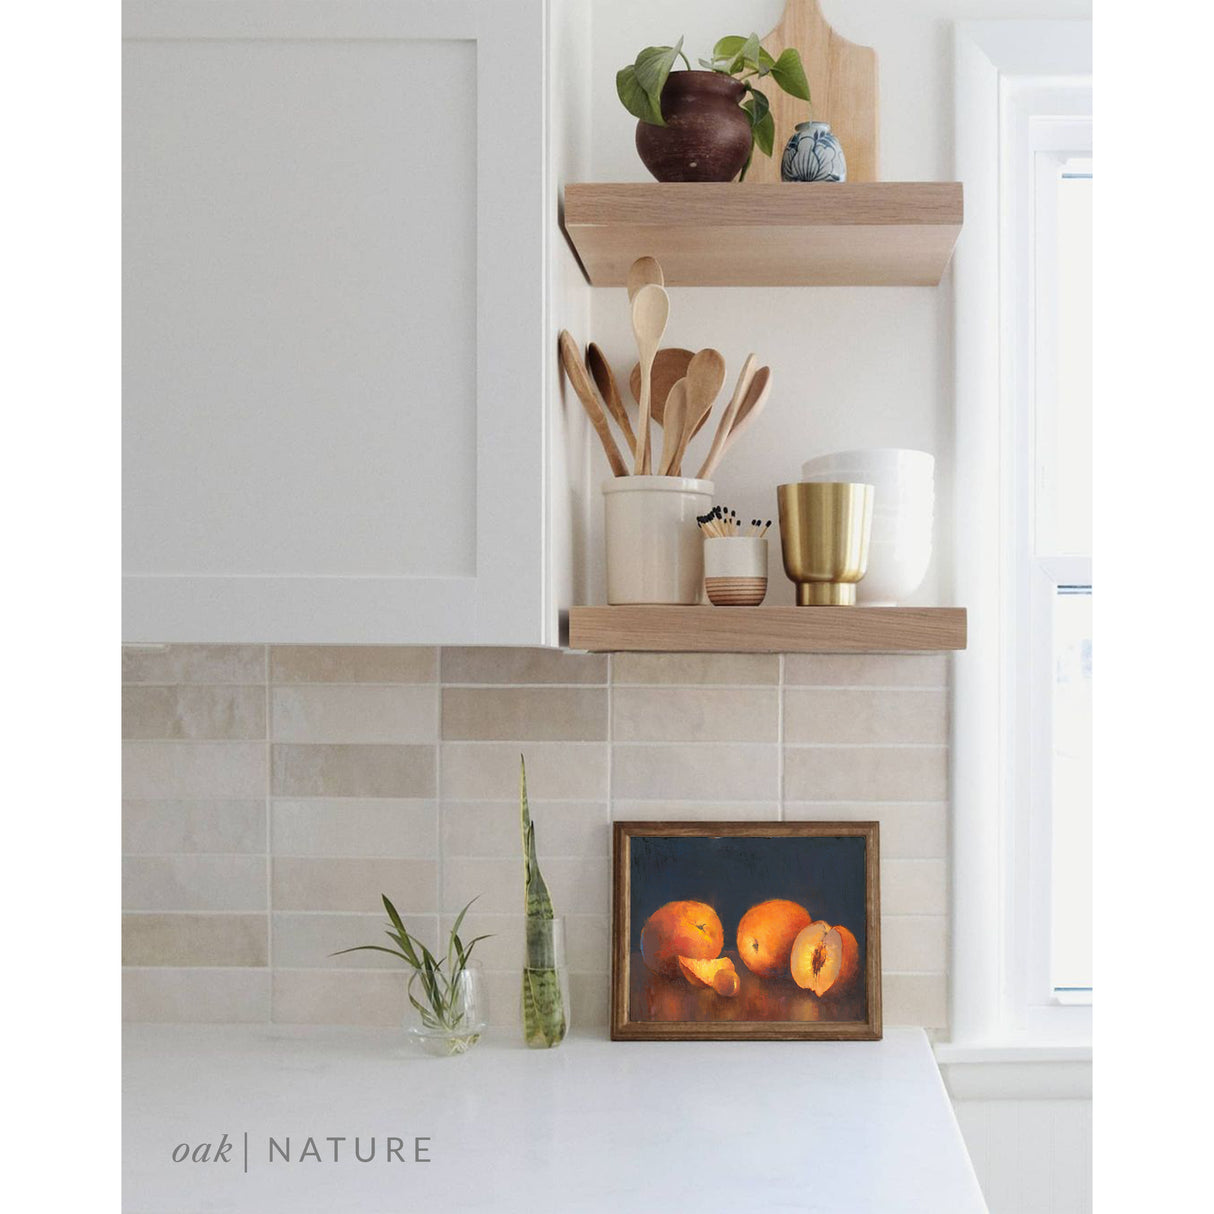 Limited Stock - Oak Nature Stain - Ultra Shelf